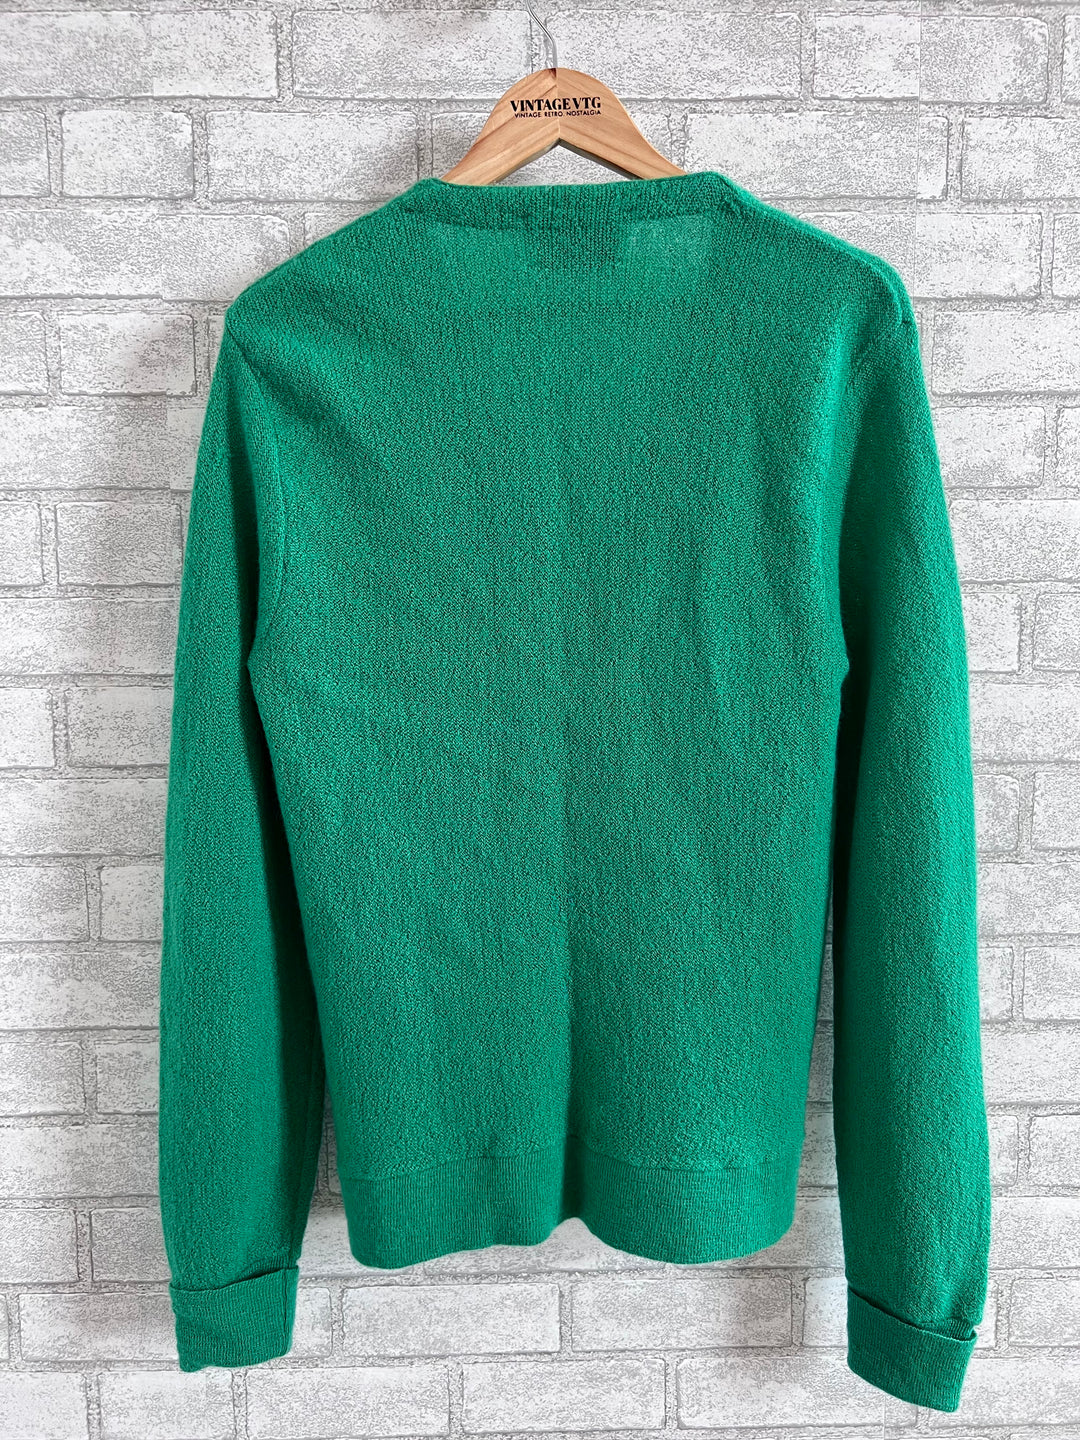 Vintage Lord Jeff Green Wool Sweater